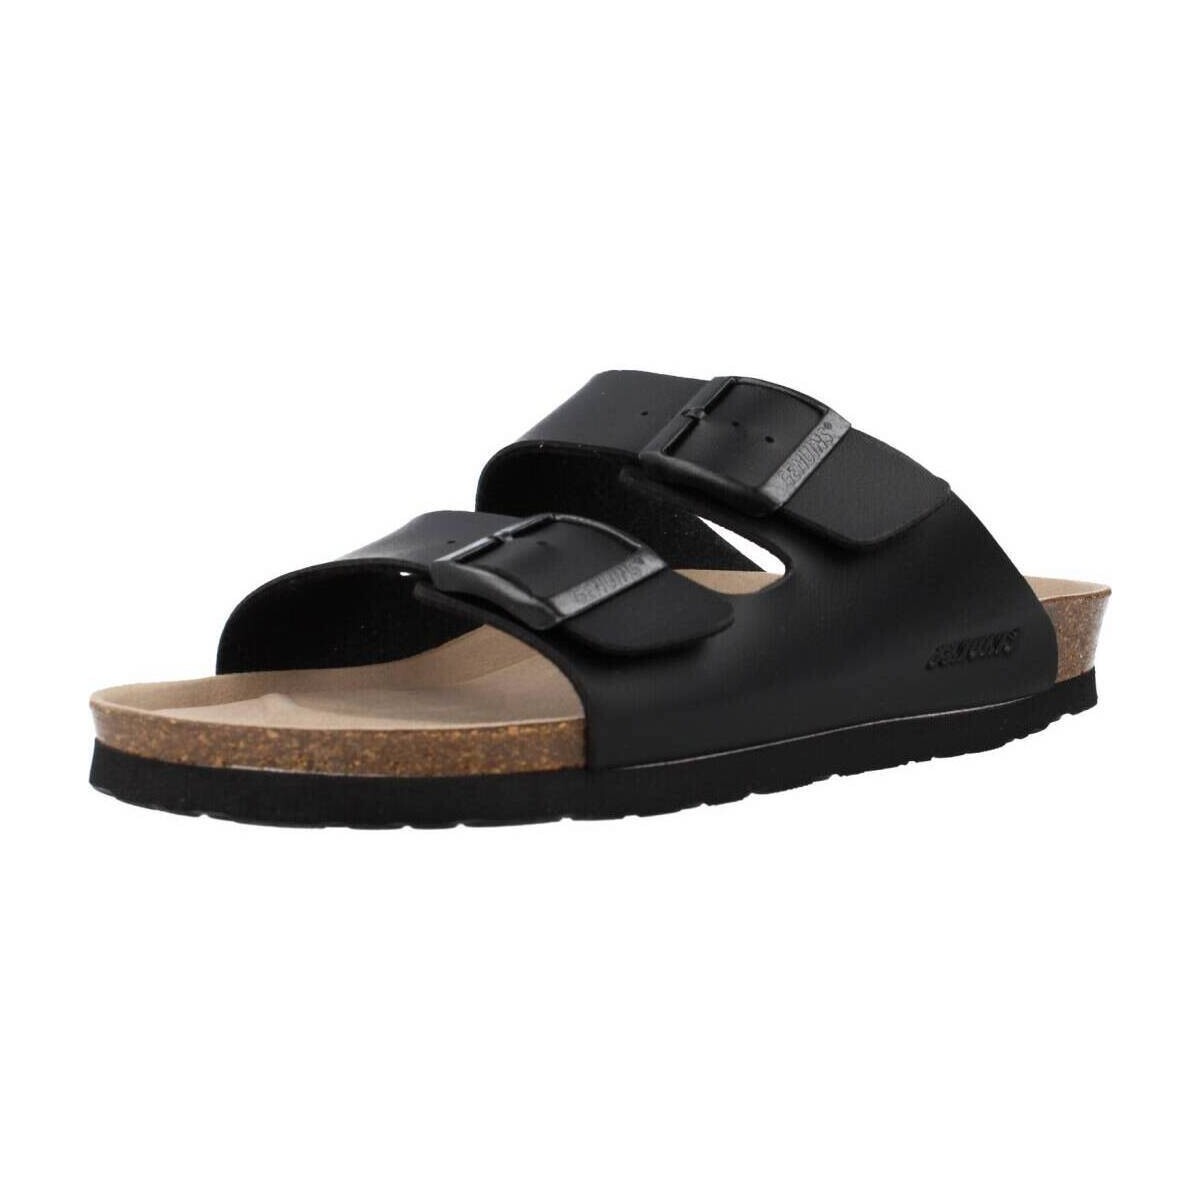 Pantofi Sandale Genuins HAWAII Negru